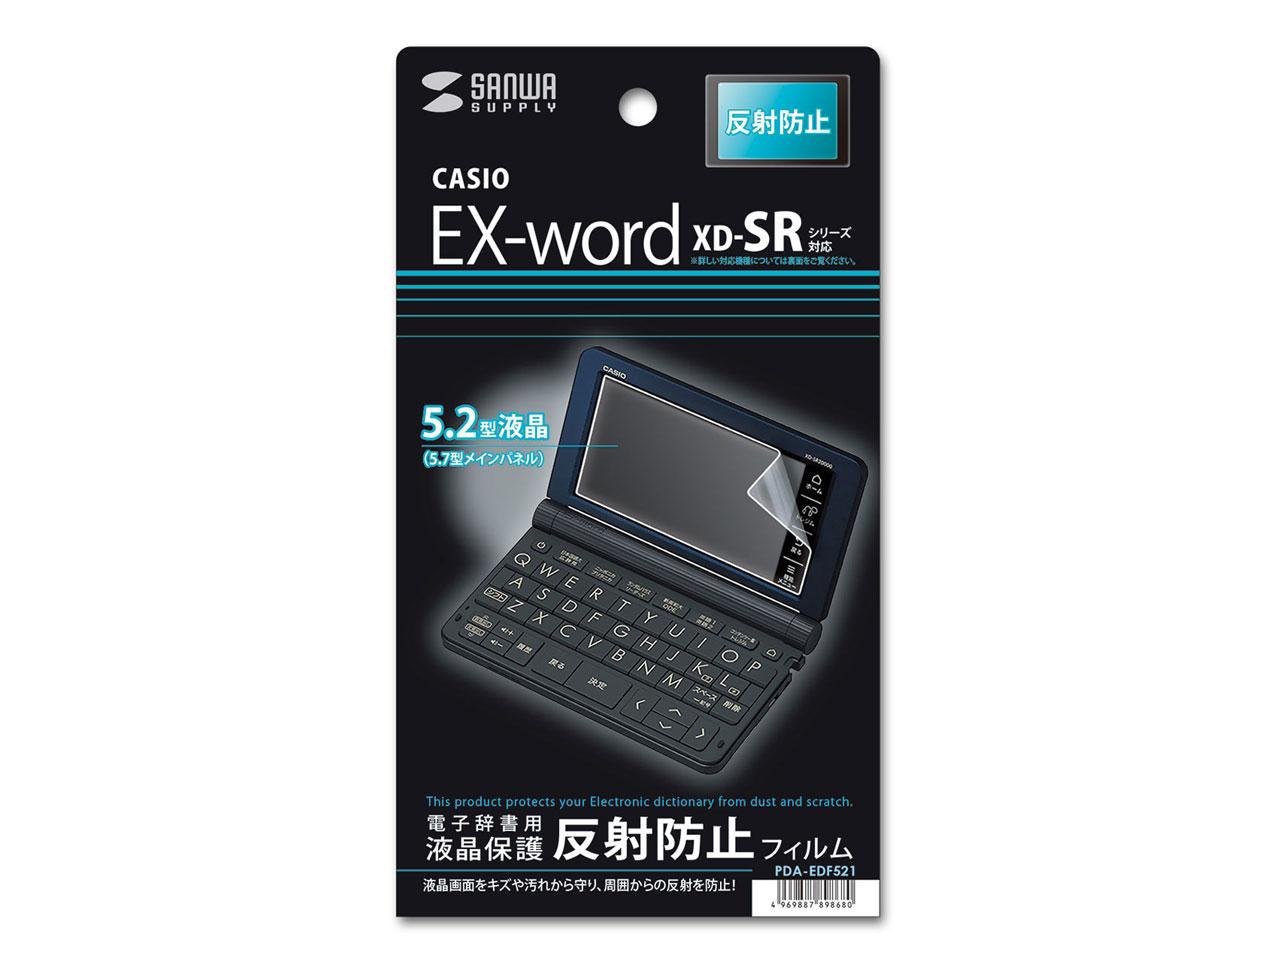 CASIO EX-word XD-SRV[Yptی씽˖h~tB@PDA-EDF521 SANWASUPPLY TTvC